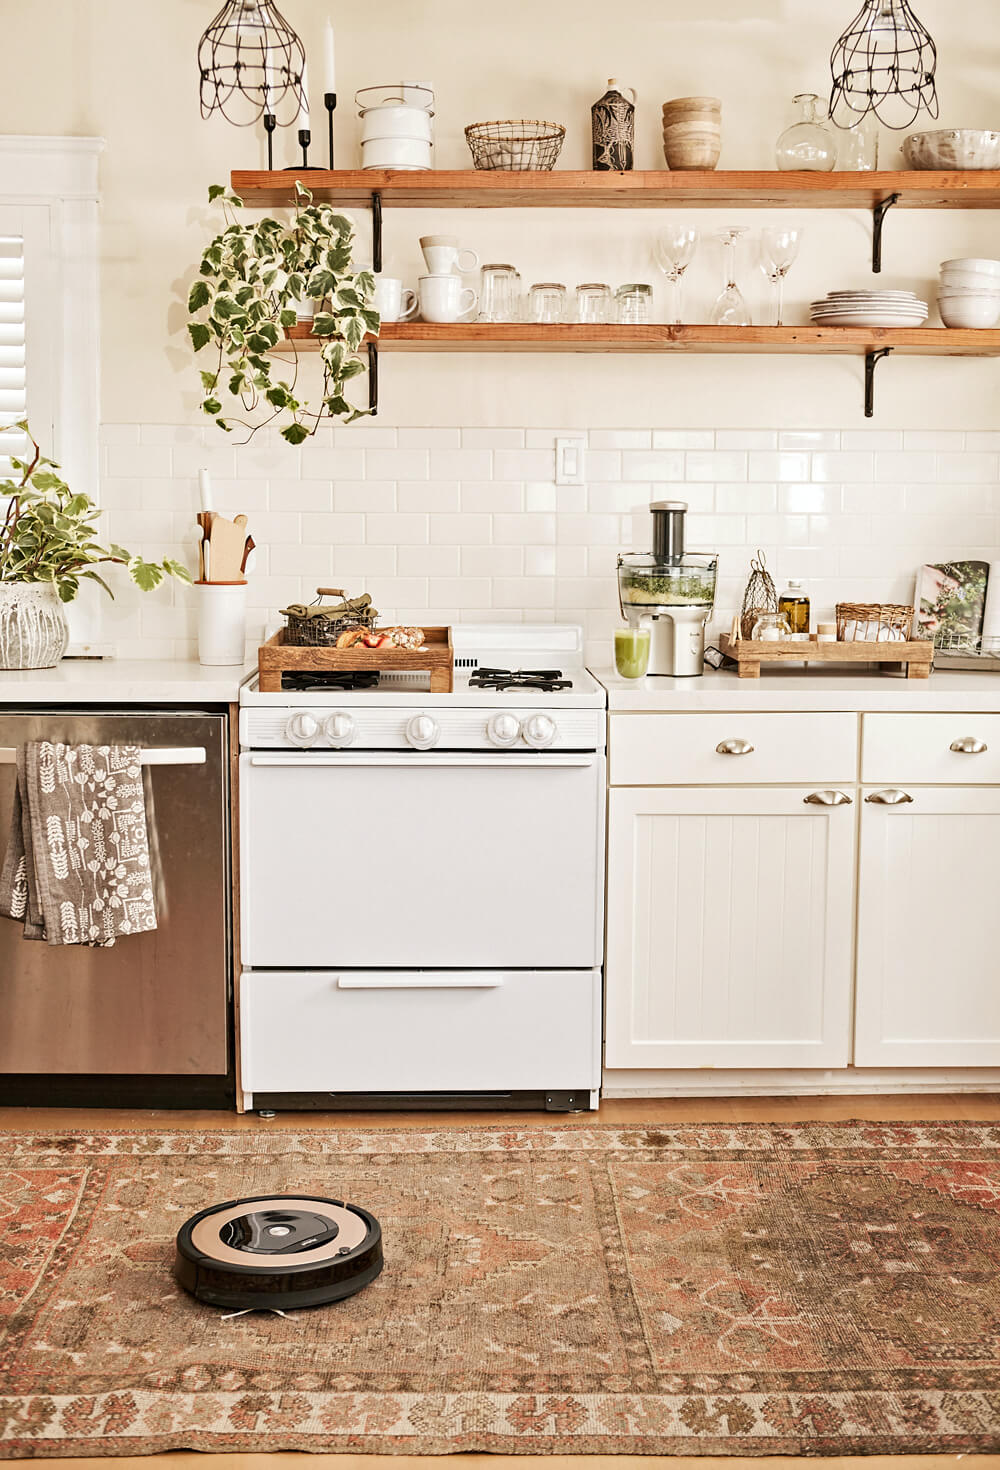 20 Stunning Kitchen Design Ideas to Inspire Your Next Remodel